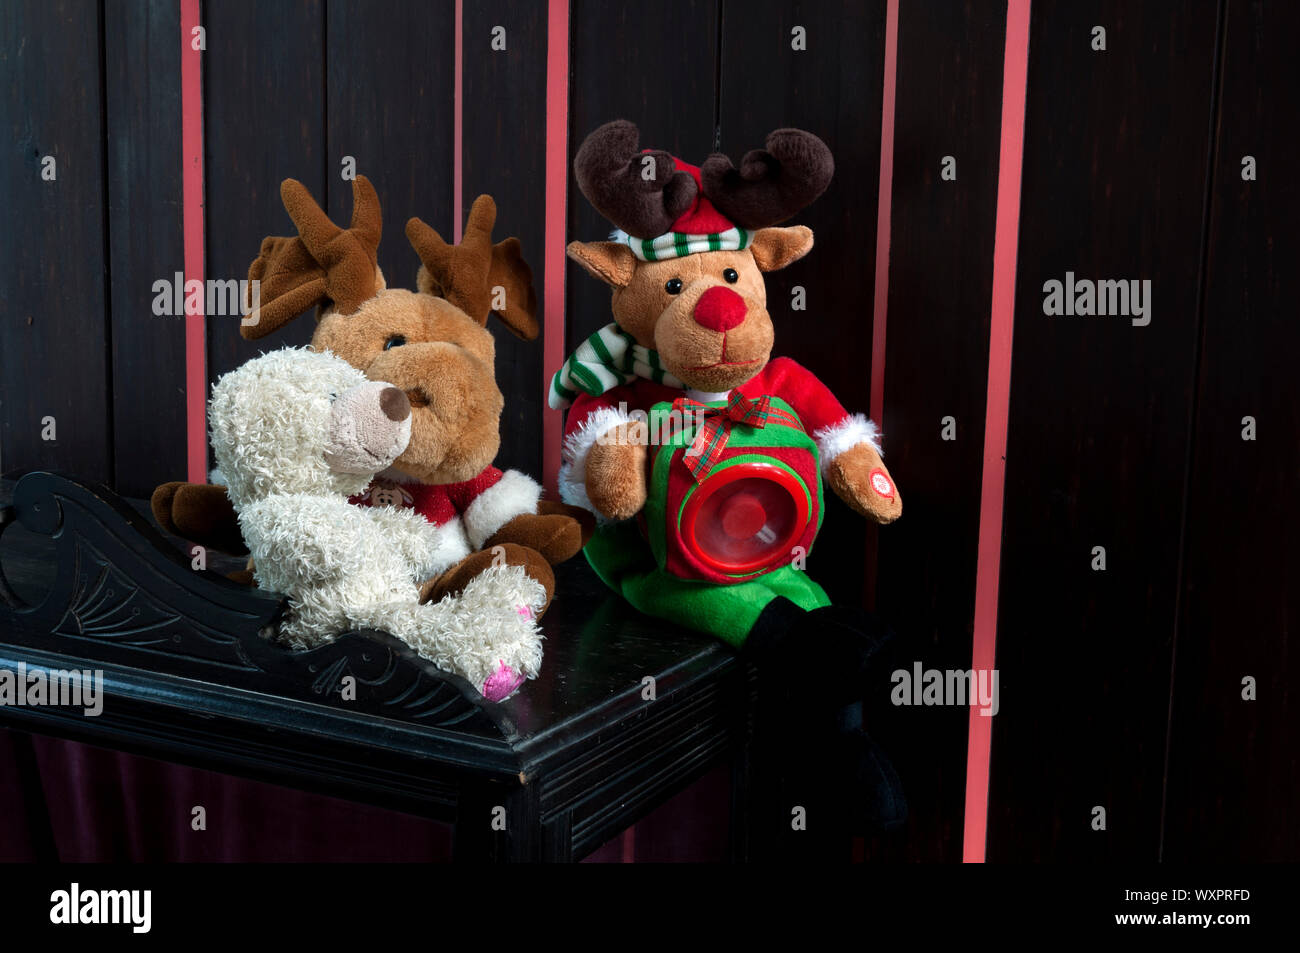 Christmassy stuffed toys inside a church Stock Photo